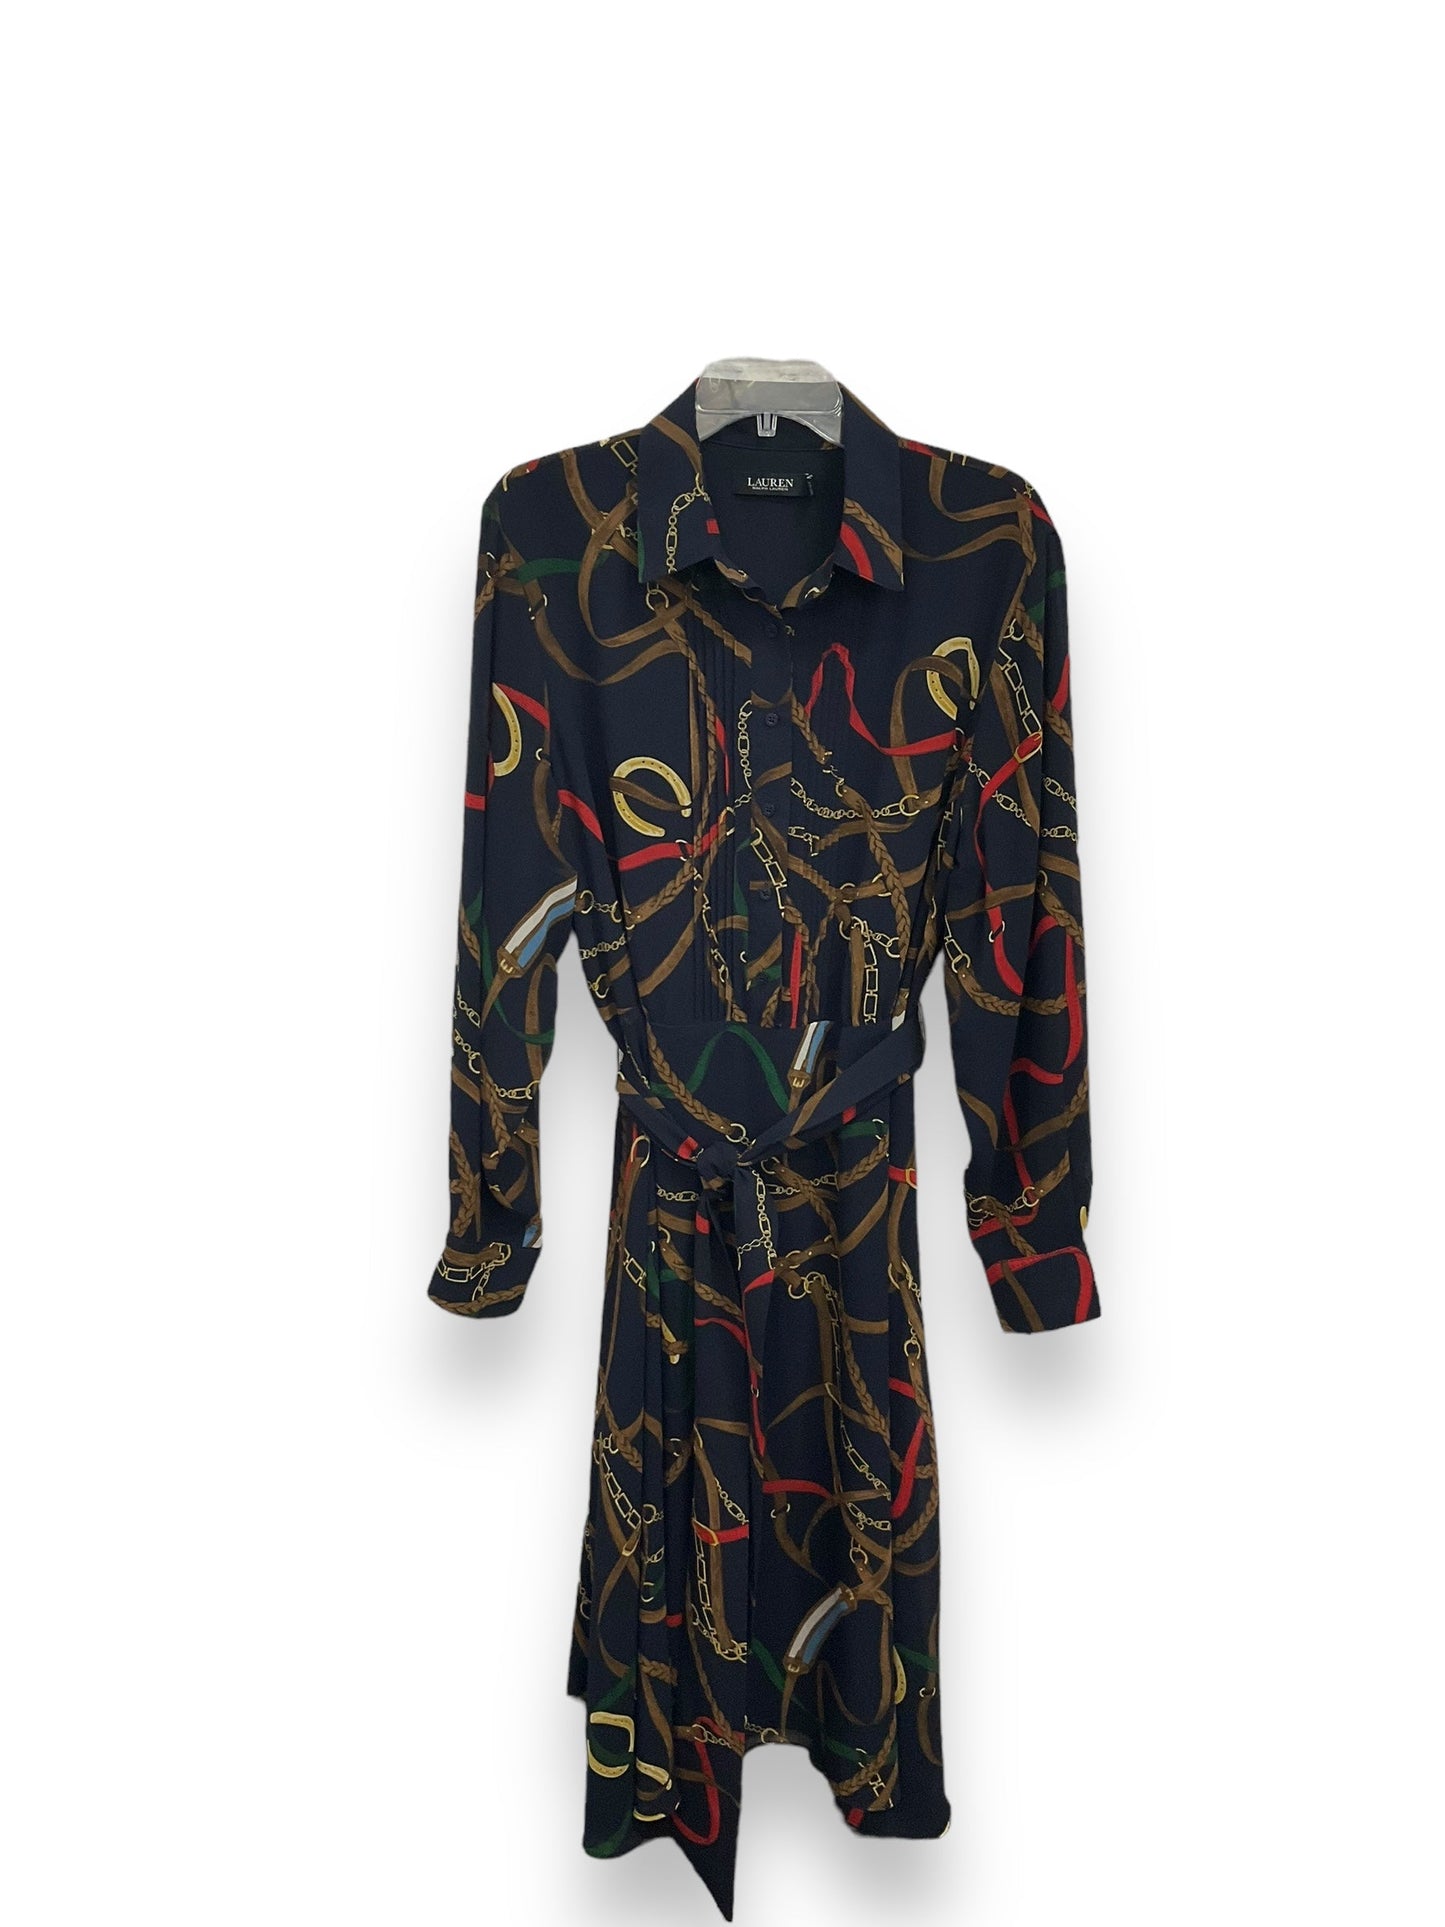 Multi-colored Dress Casual Maxi Ralph Lauren Black Label, Size 14